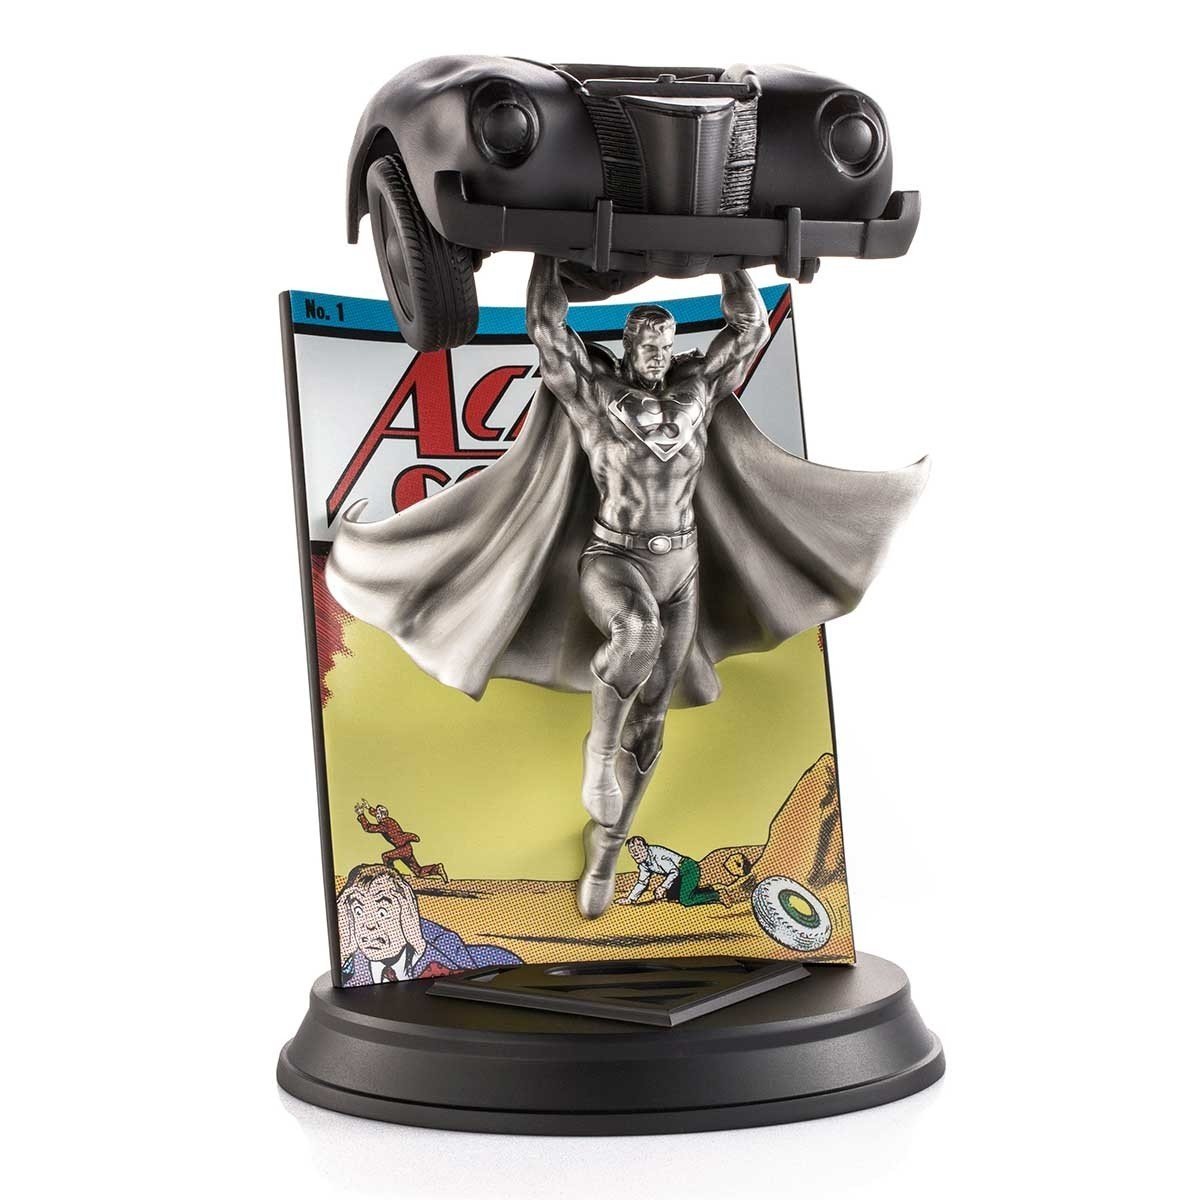 Superman Action Comics #1 Limited Edition Figurine - DC Statue